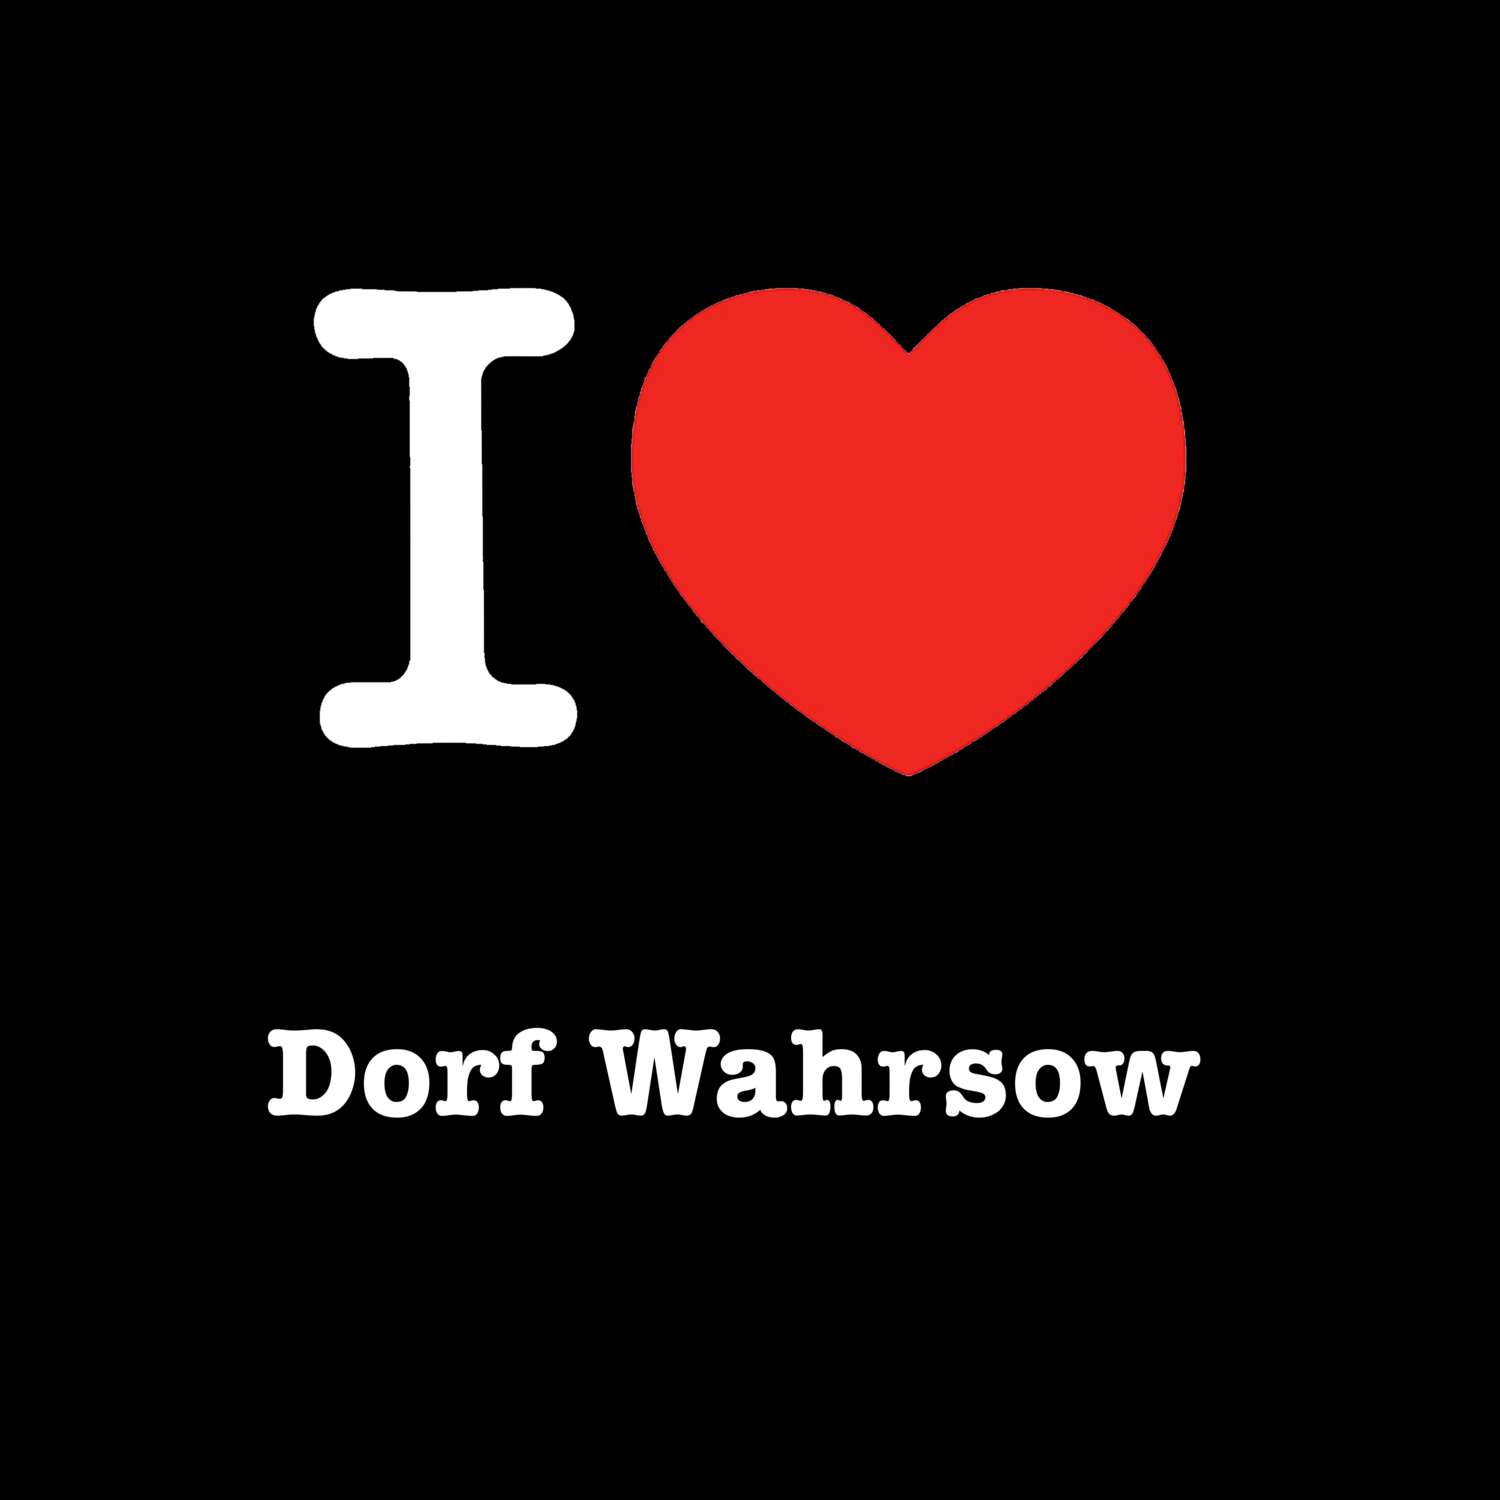 Dorf Wahrsow T-Shirt »I love«